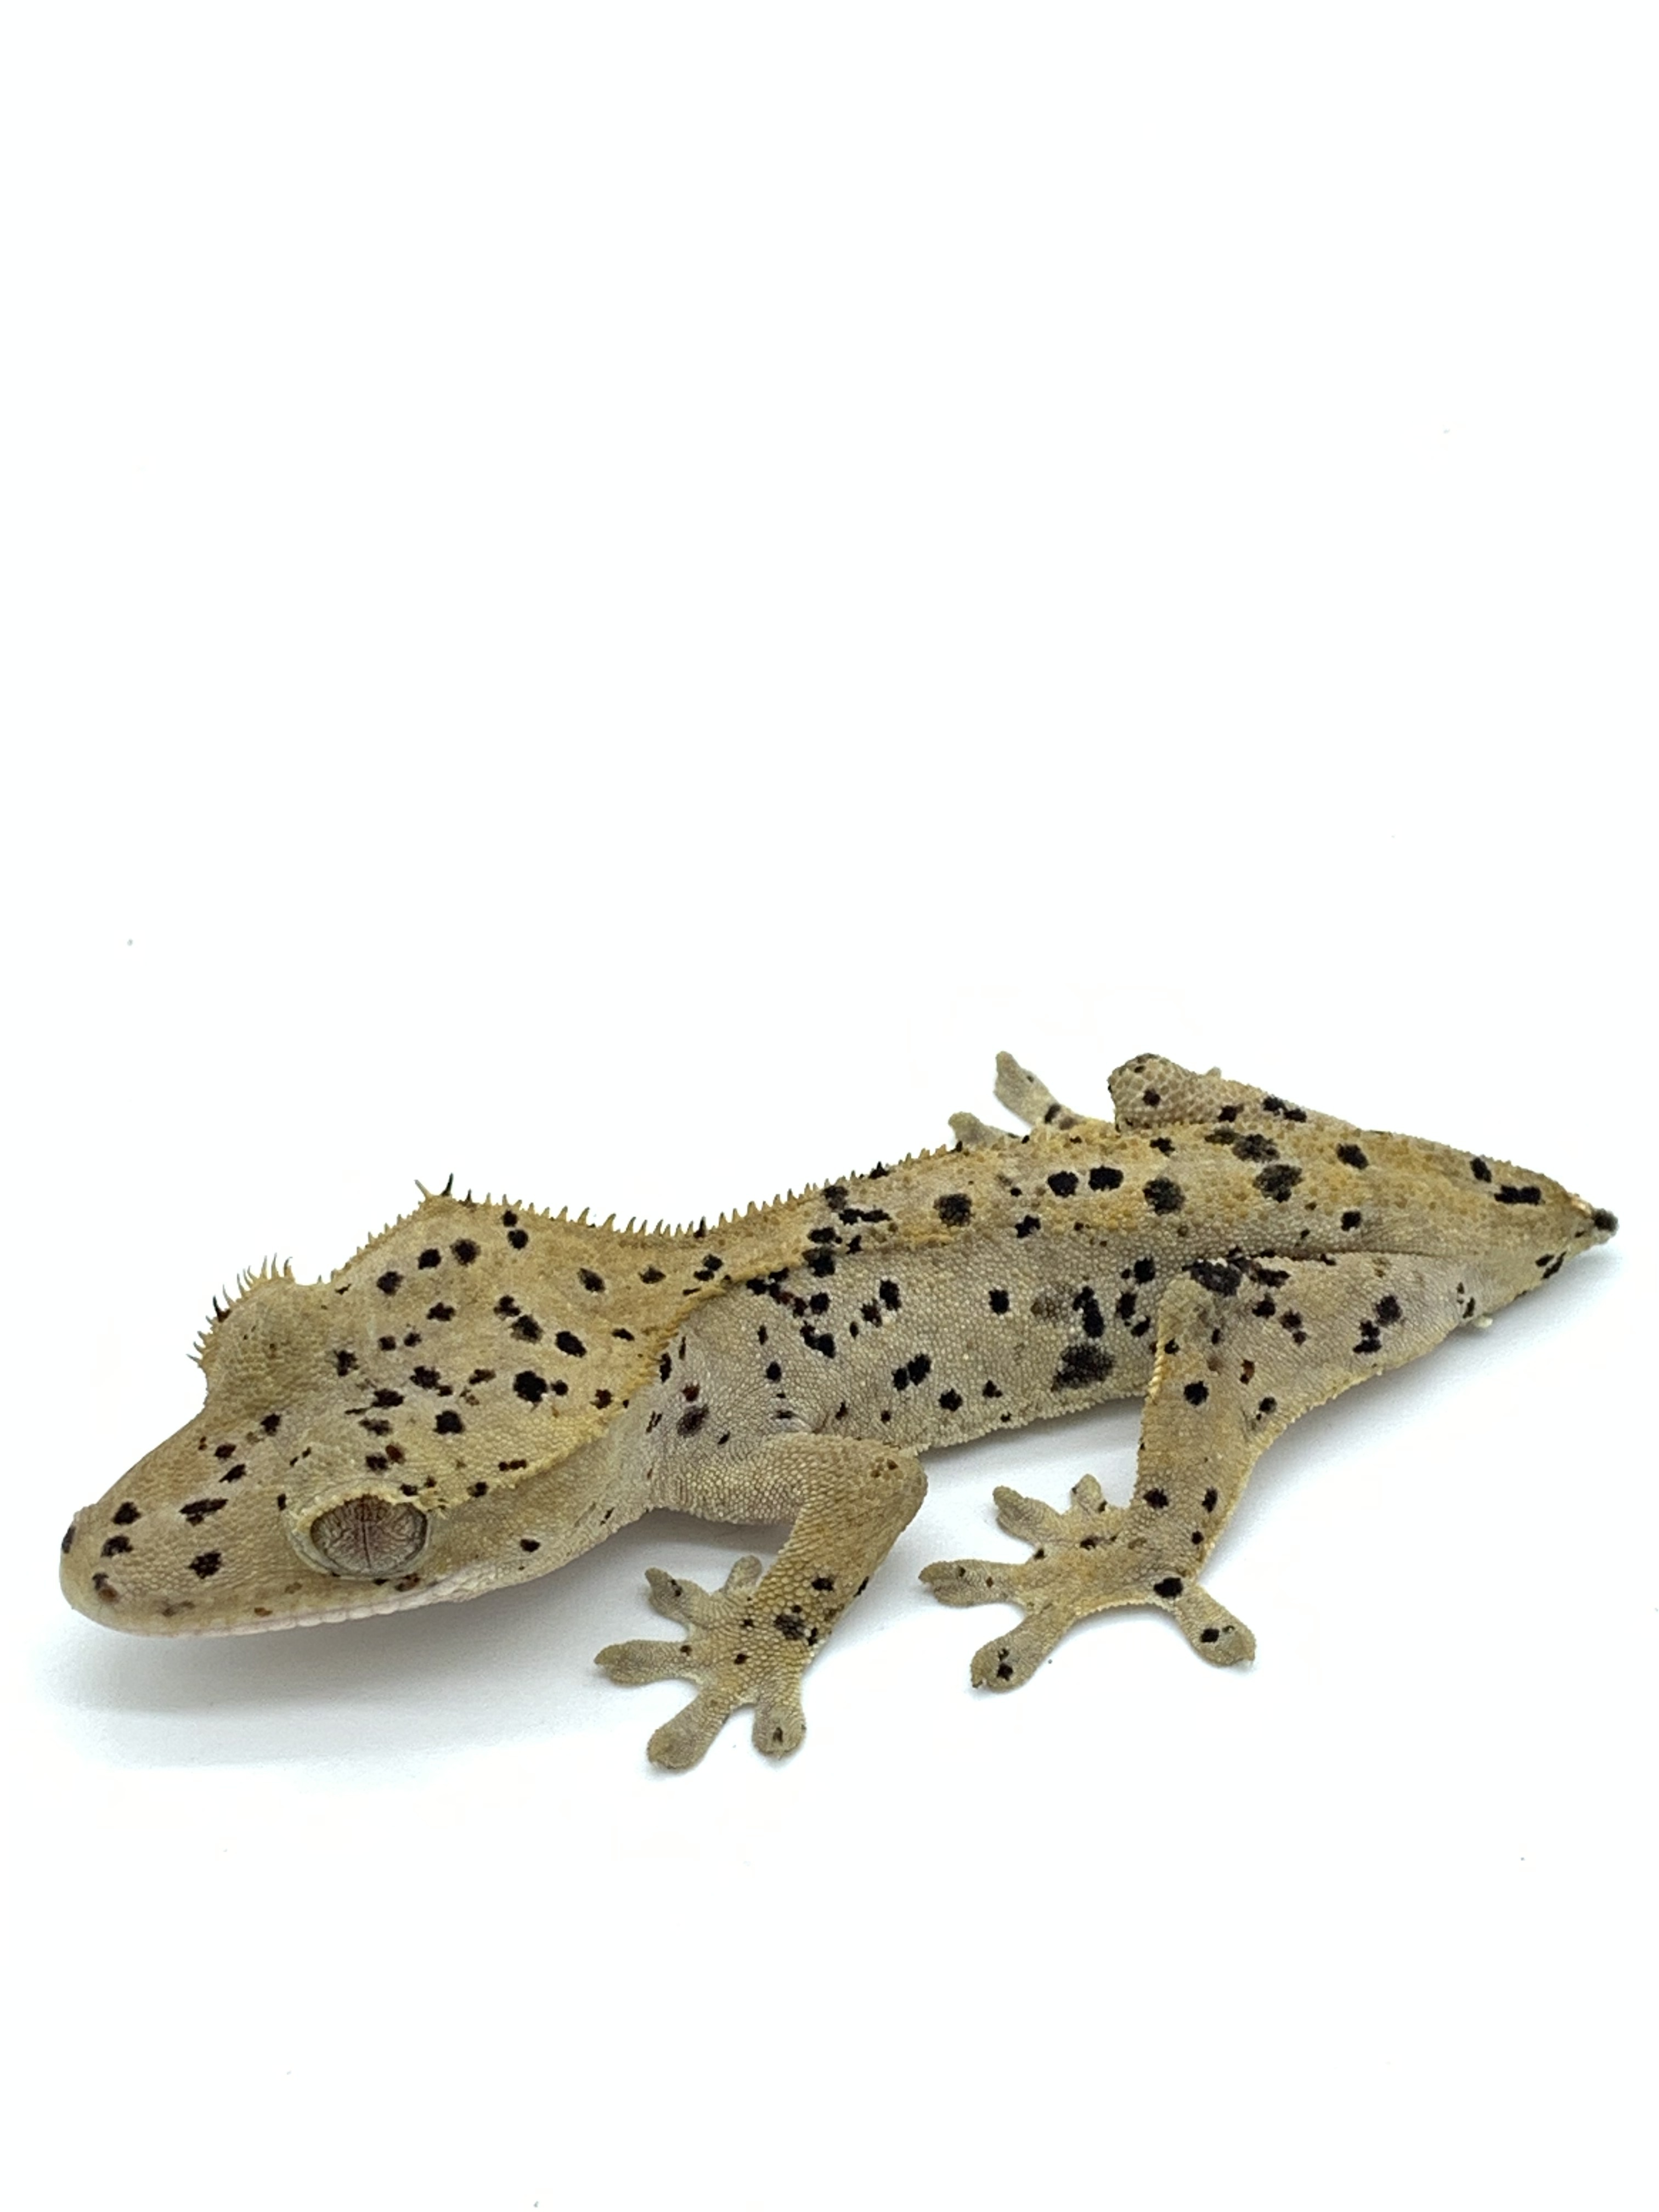 Super Dalmatian Crested Gecko by Bay gecko